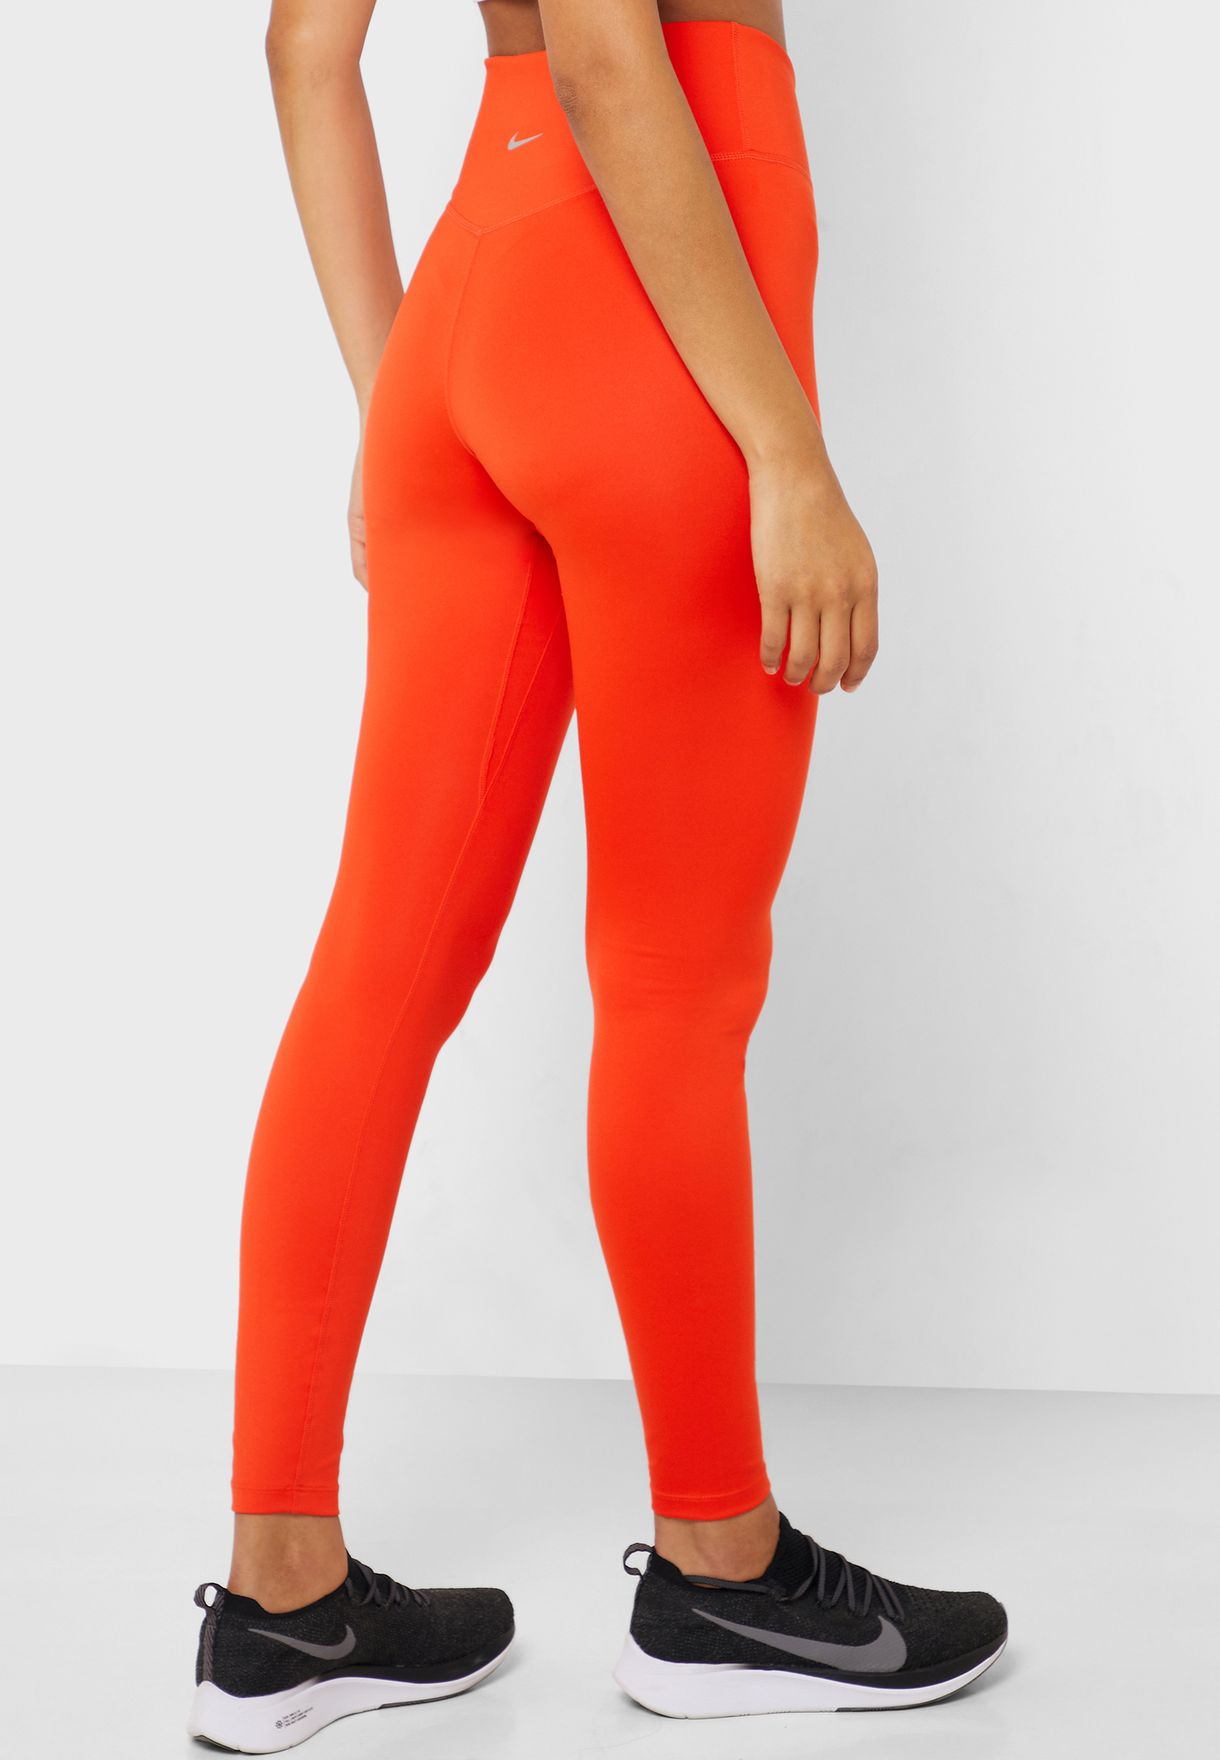 orange nike leggings